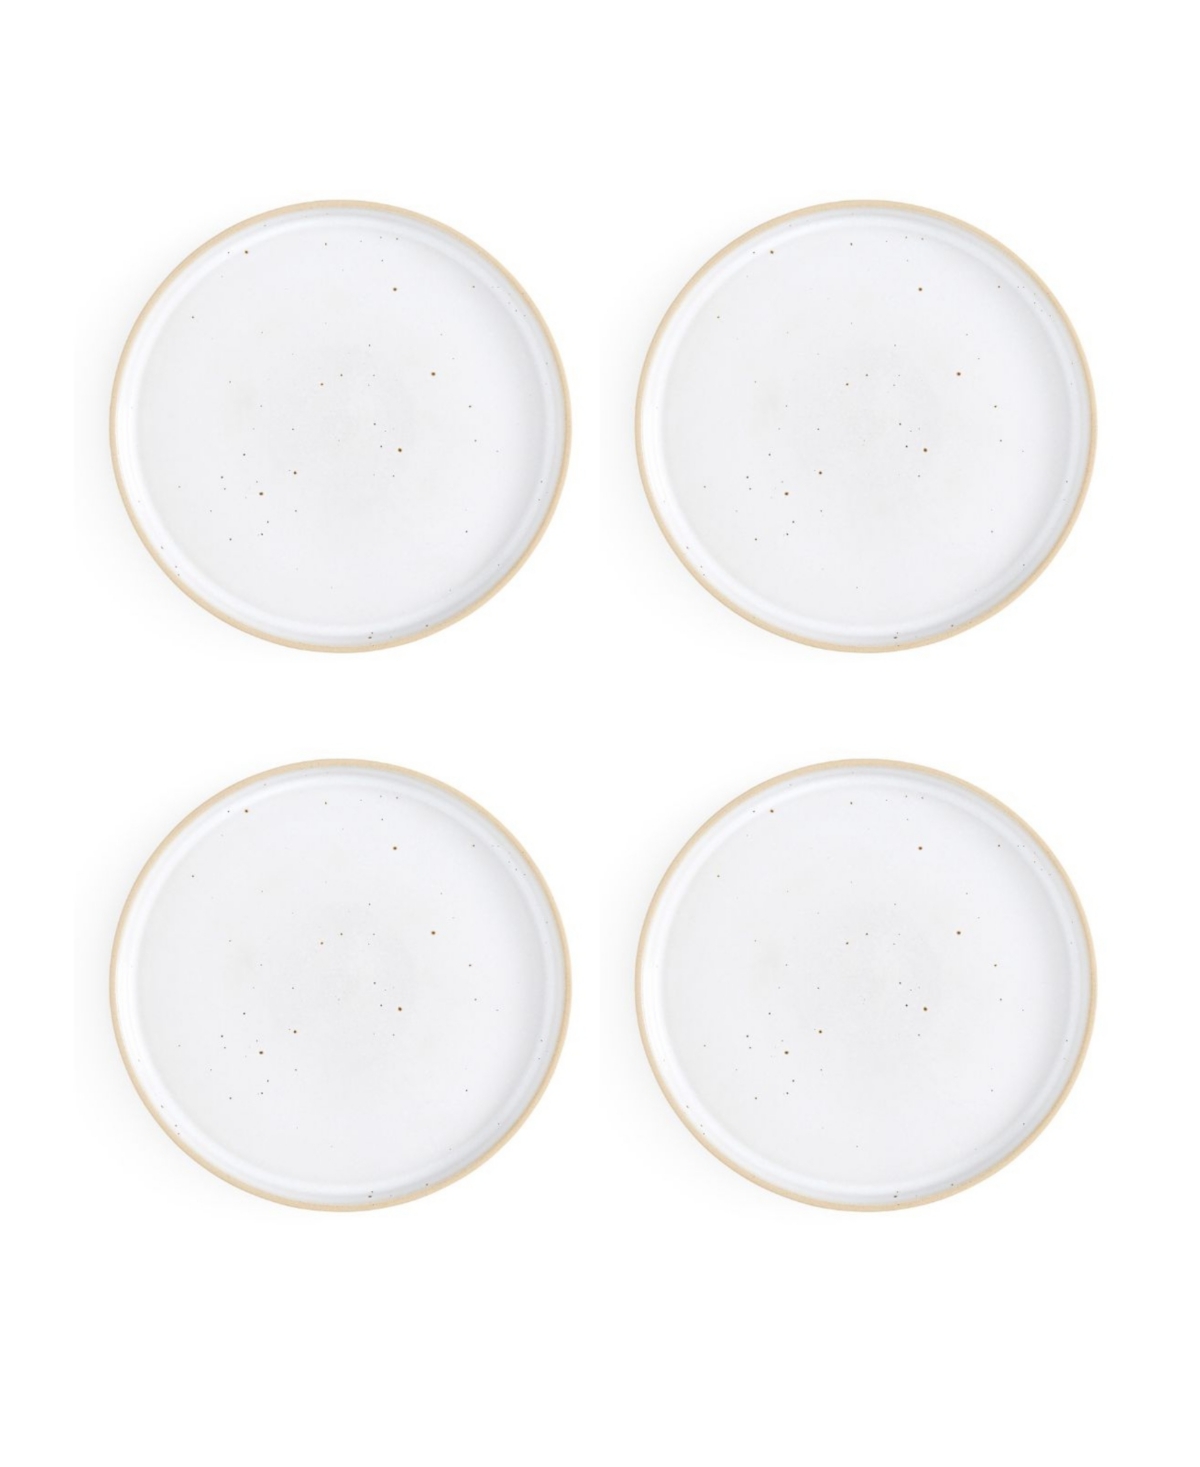 Minerals Dinner Plates, Set of 4 - Aquamarine